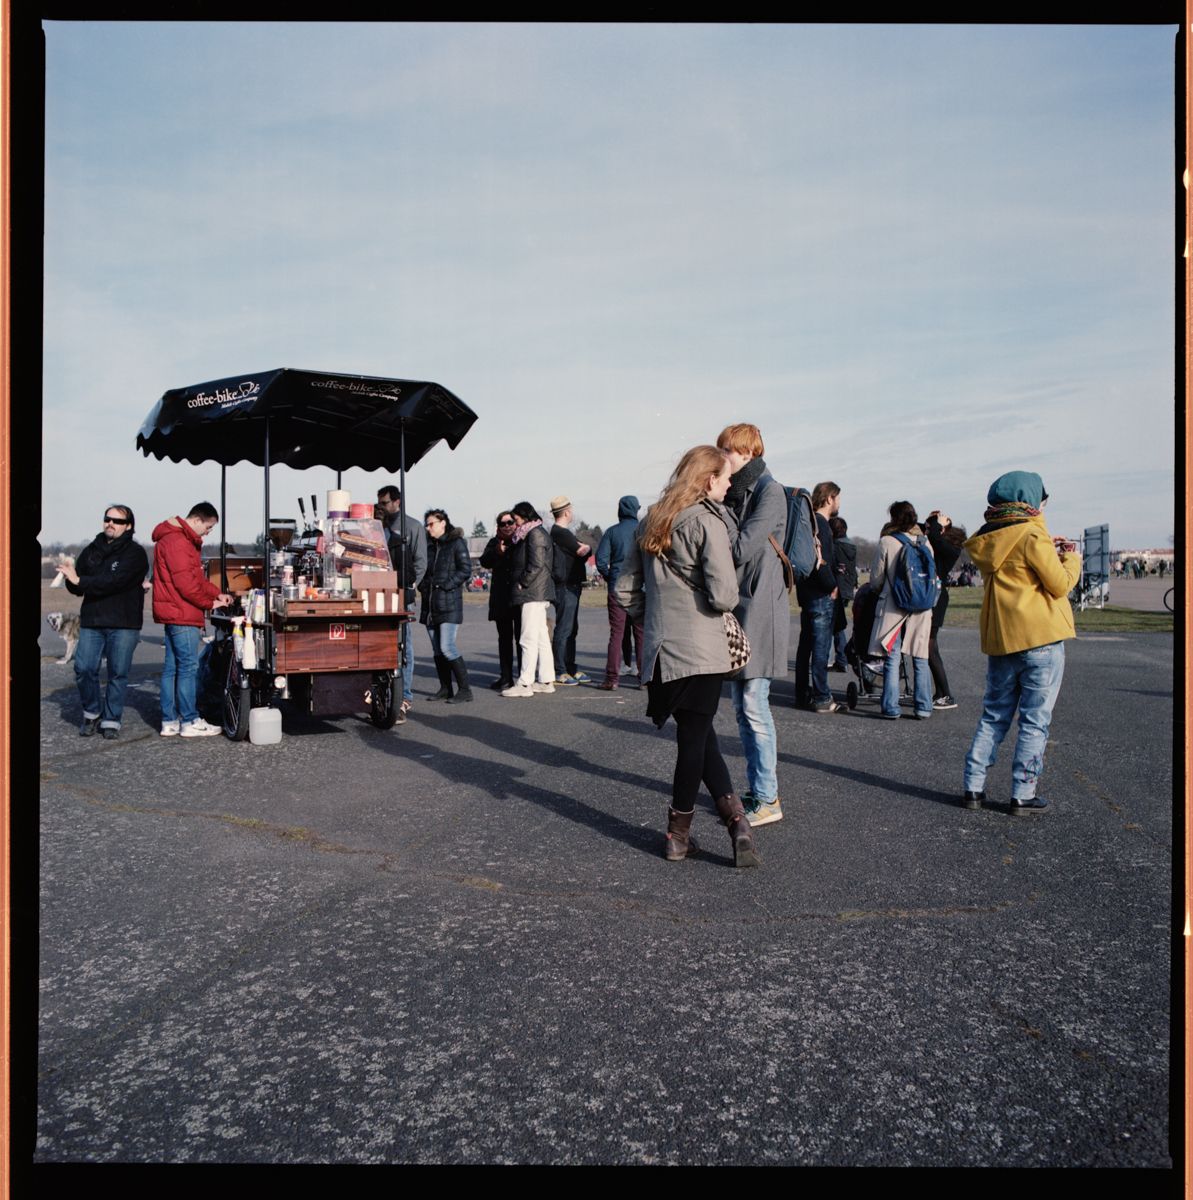 Analoge Fotografie auf dem Tempelhofer Feld mit der Hasselblad